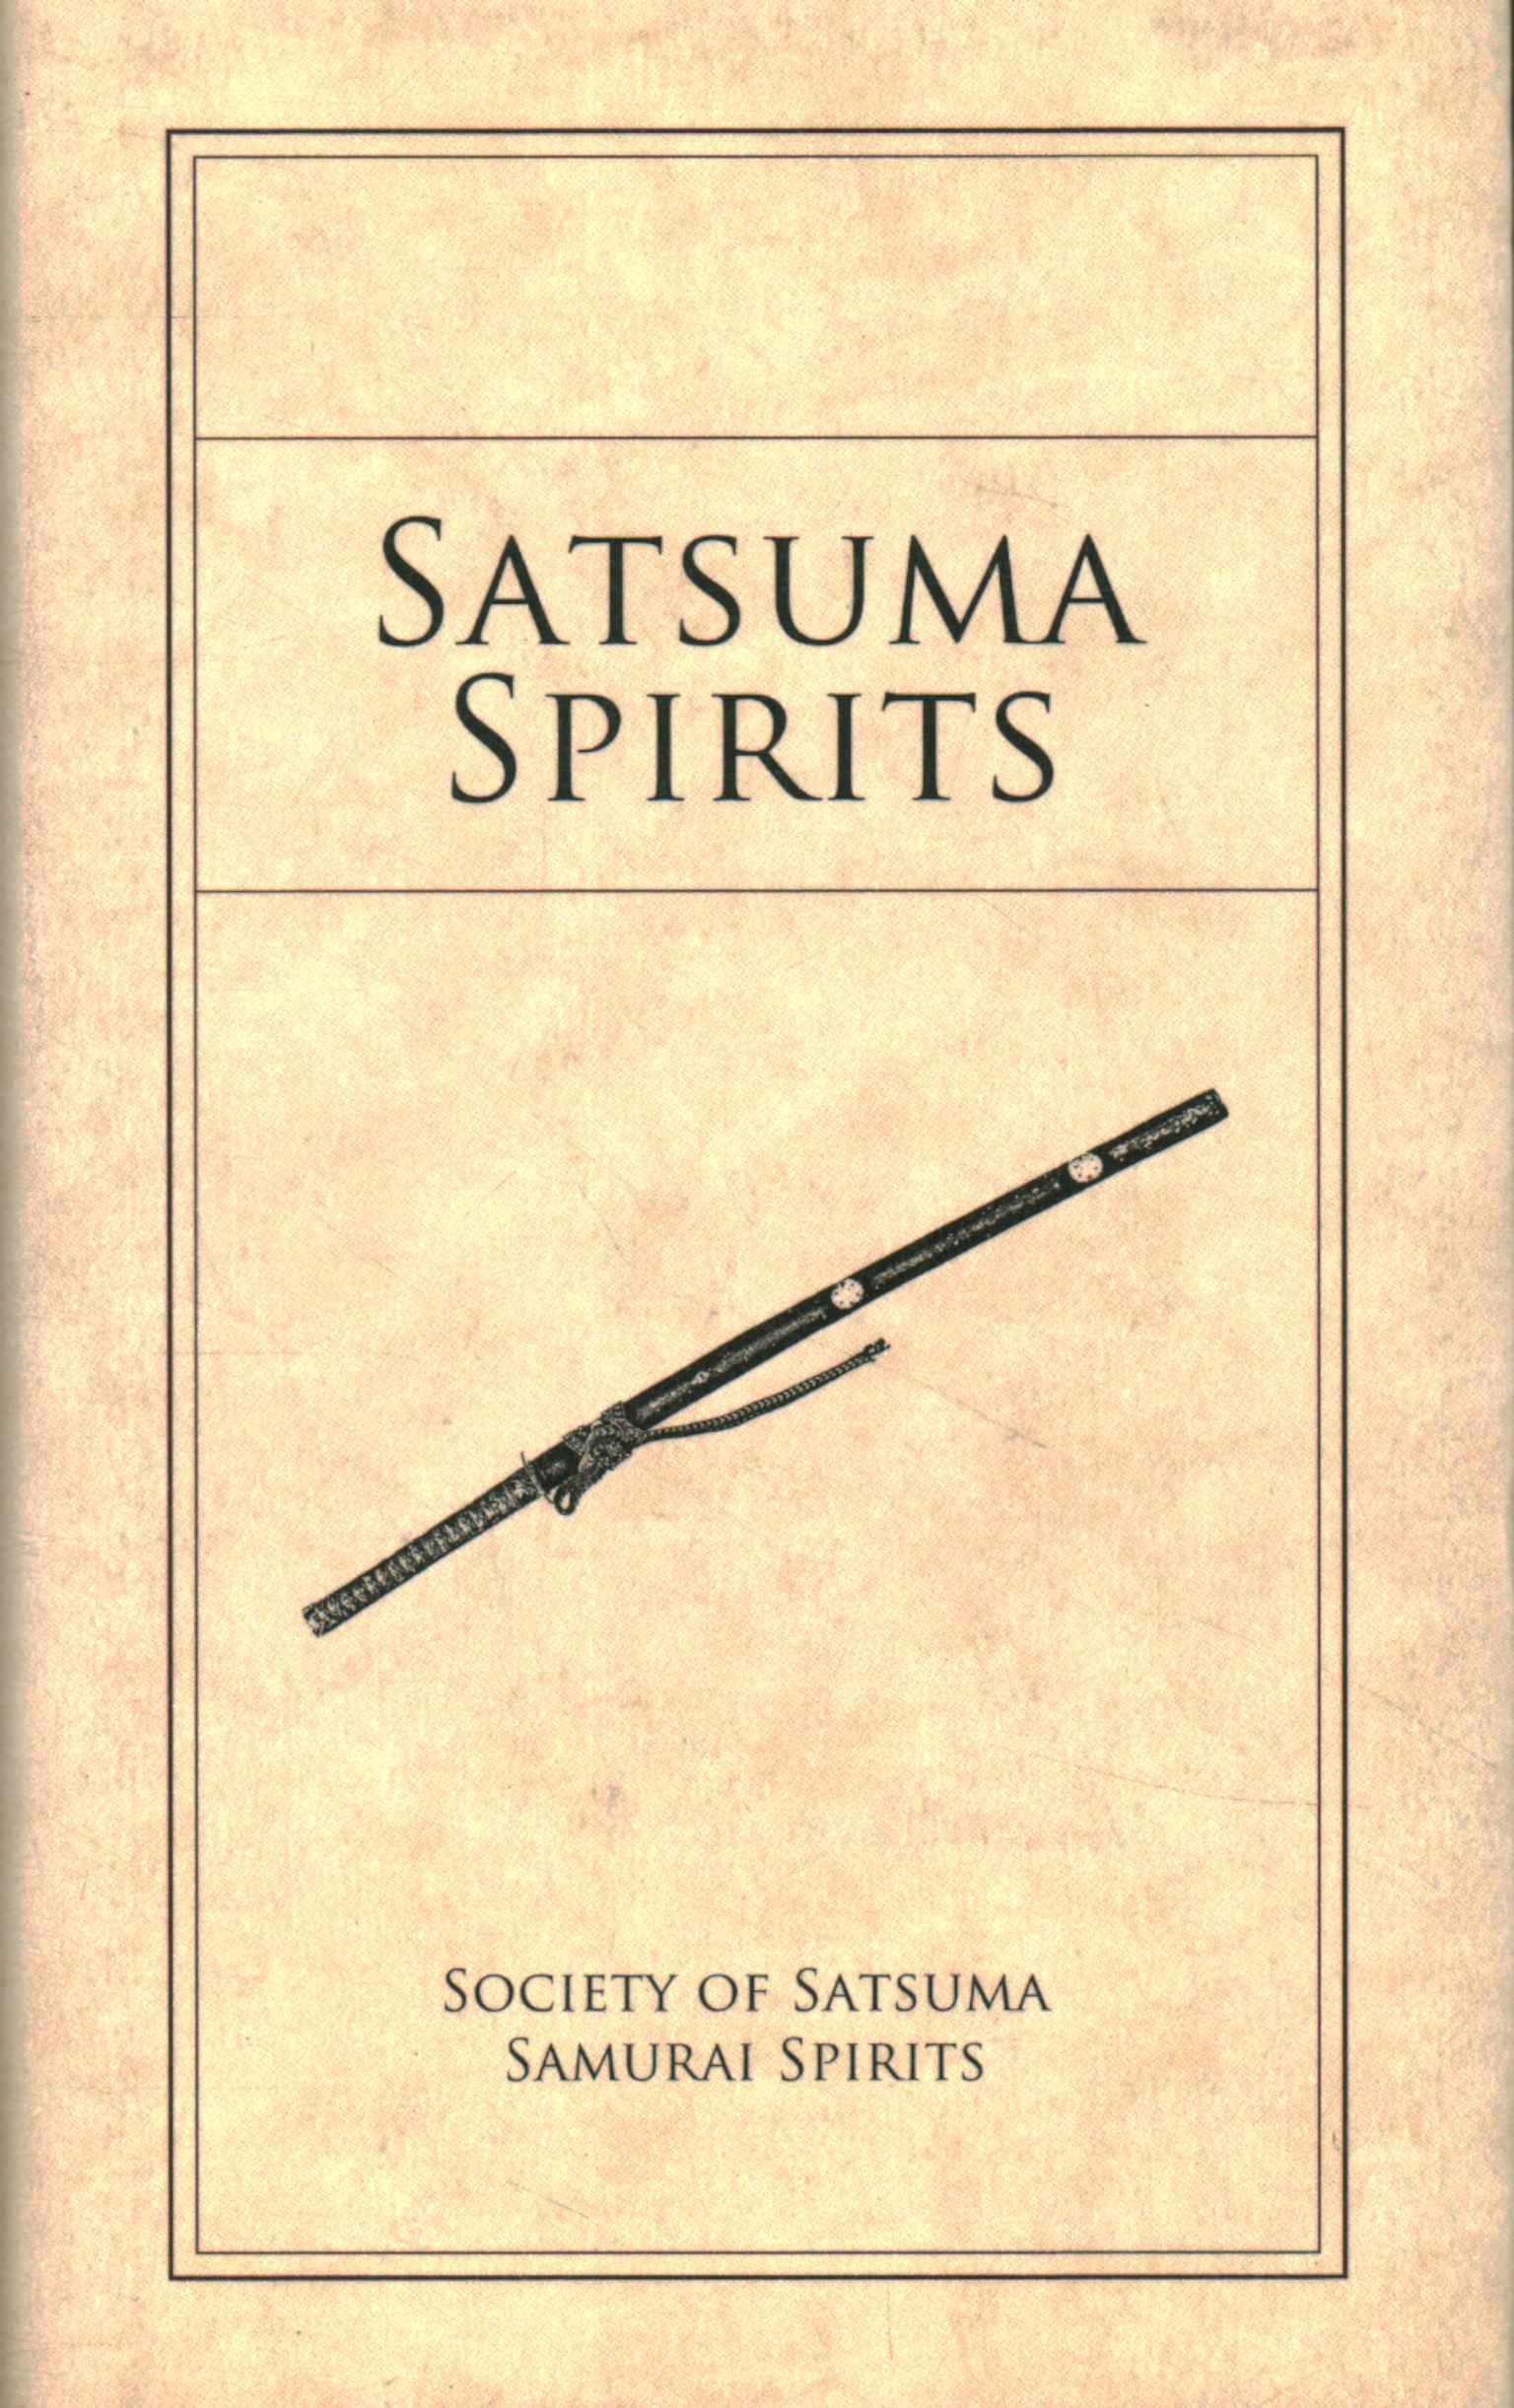 Satsuma spirits